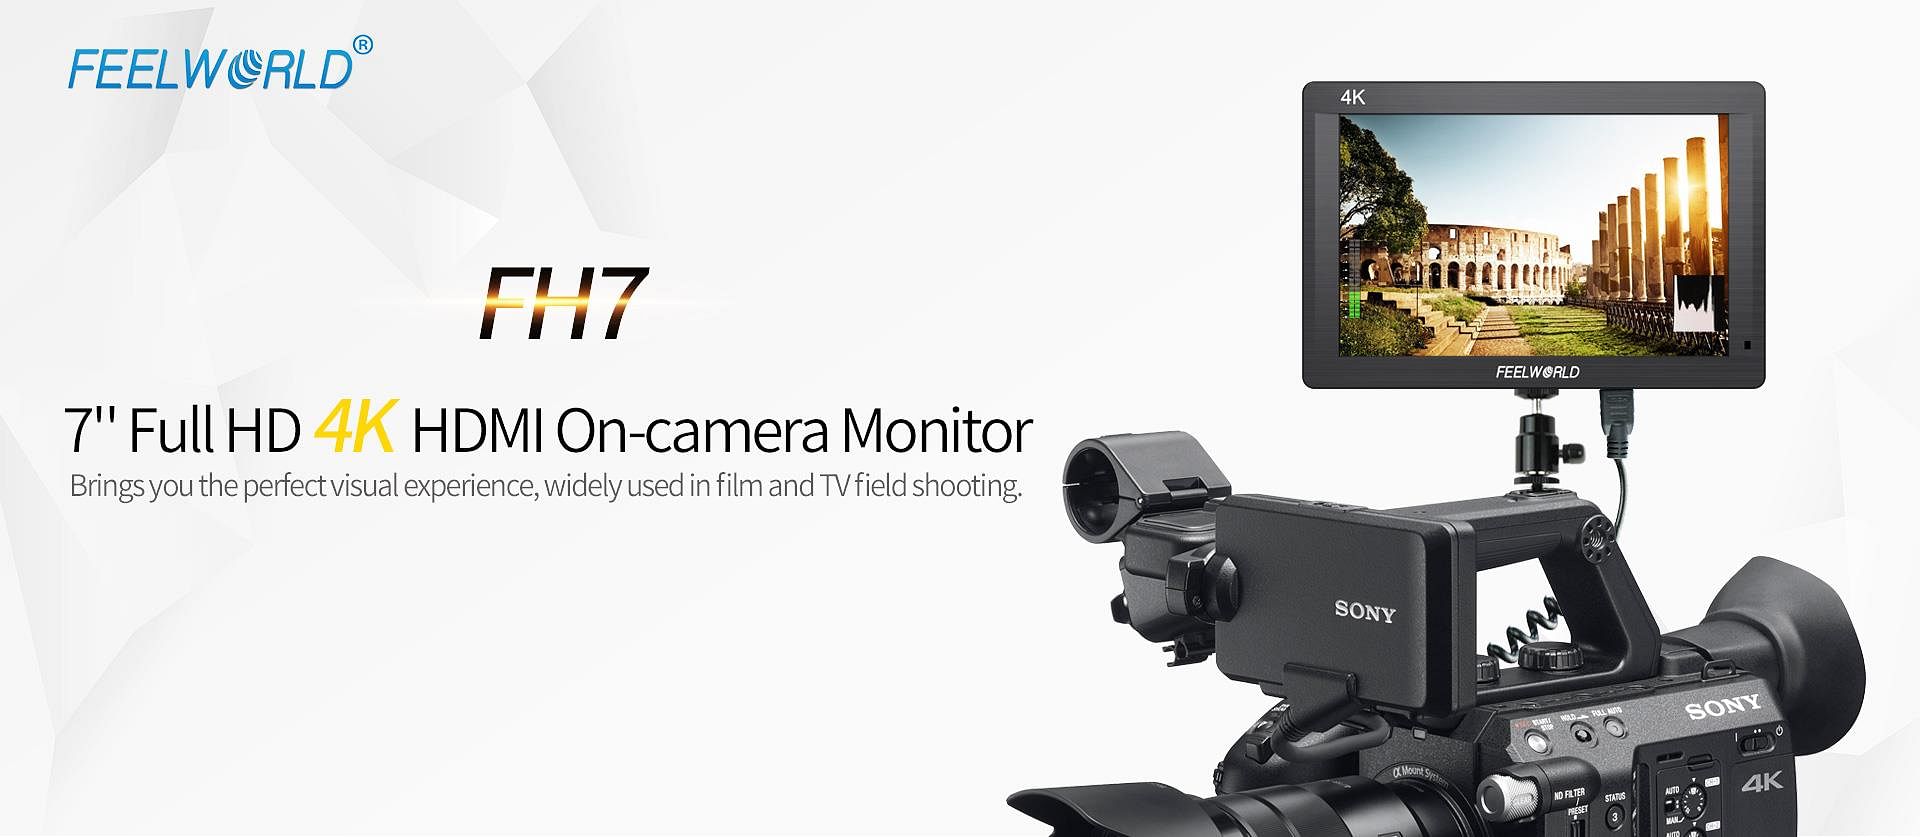 FEELWORLD FH7 7'' 4K On-camera Monitor - Feelworld Philippines